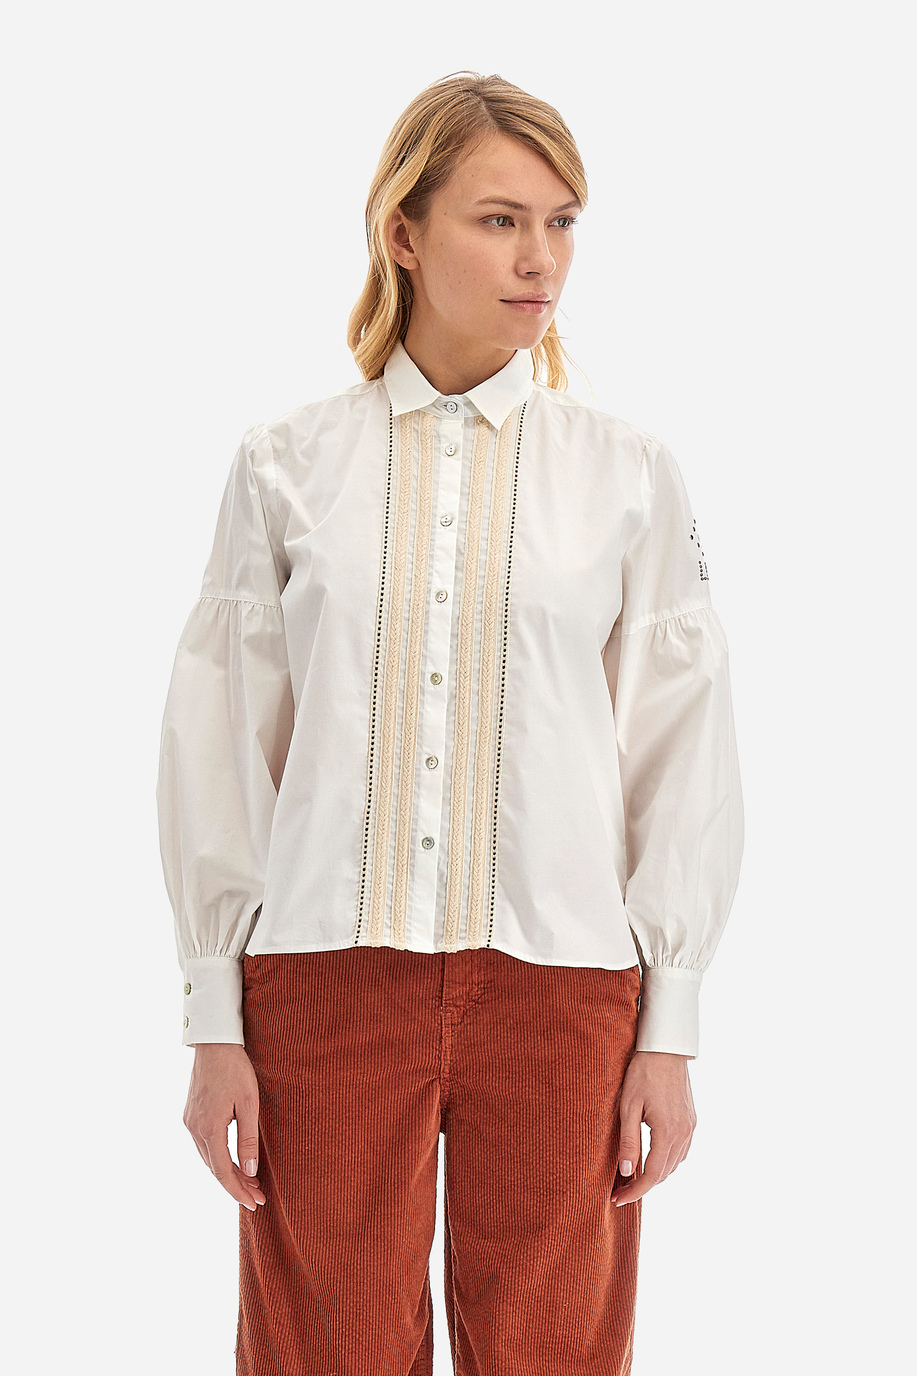 Damen -Hemd regular fit - Welbey - Business Looks Frauen | La Martina - Official Online Shop